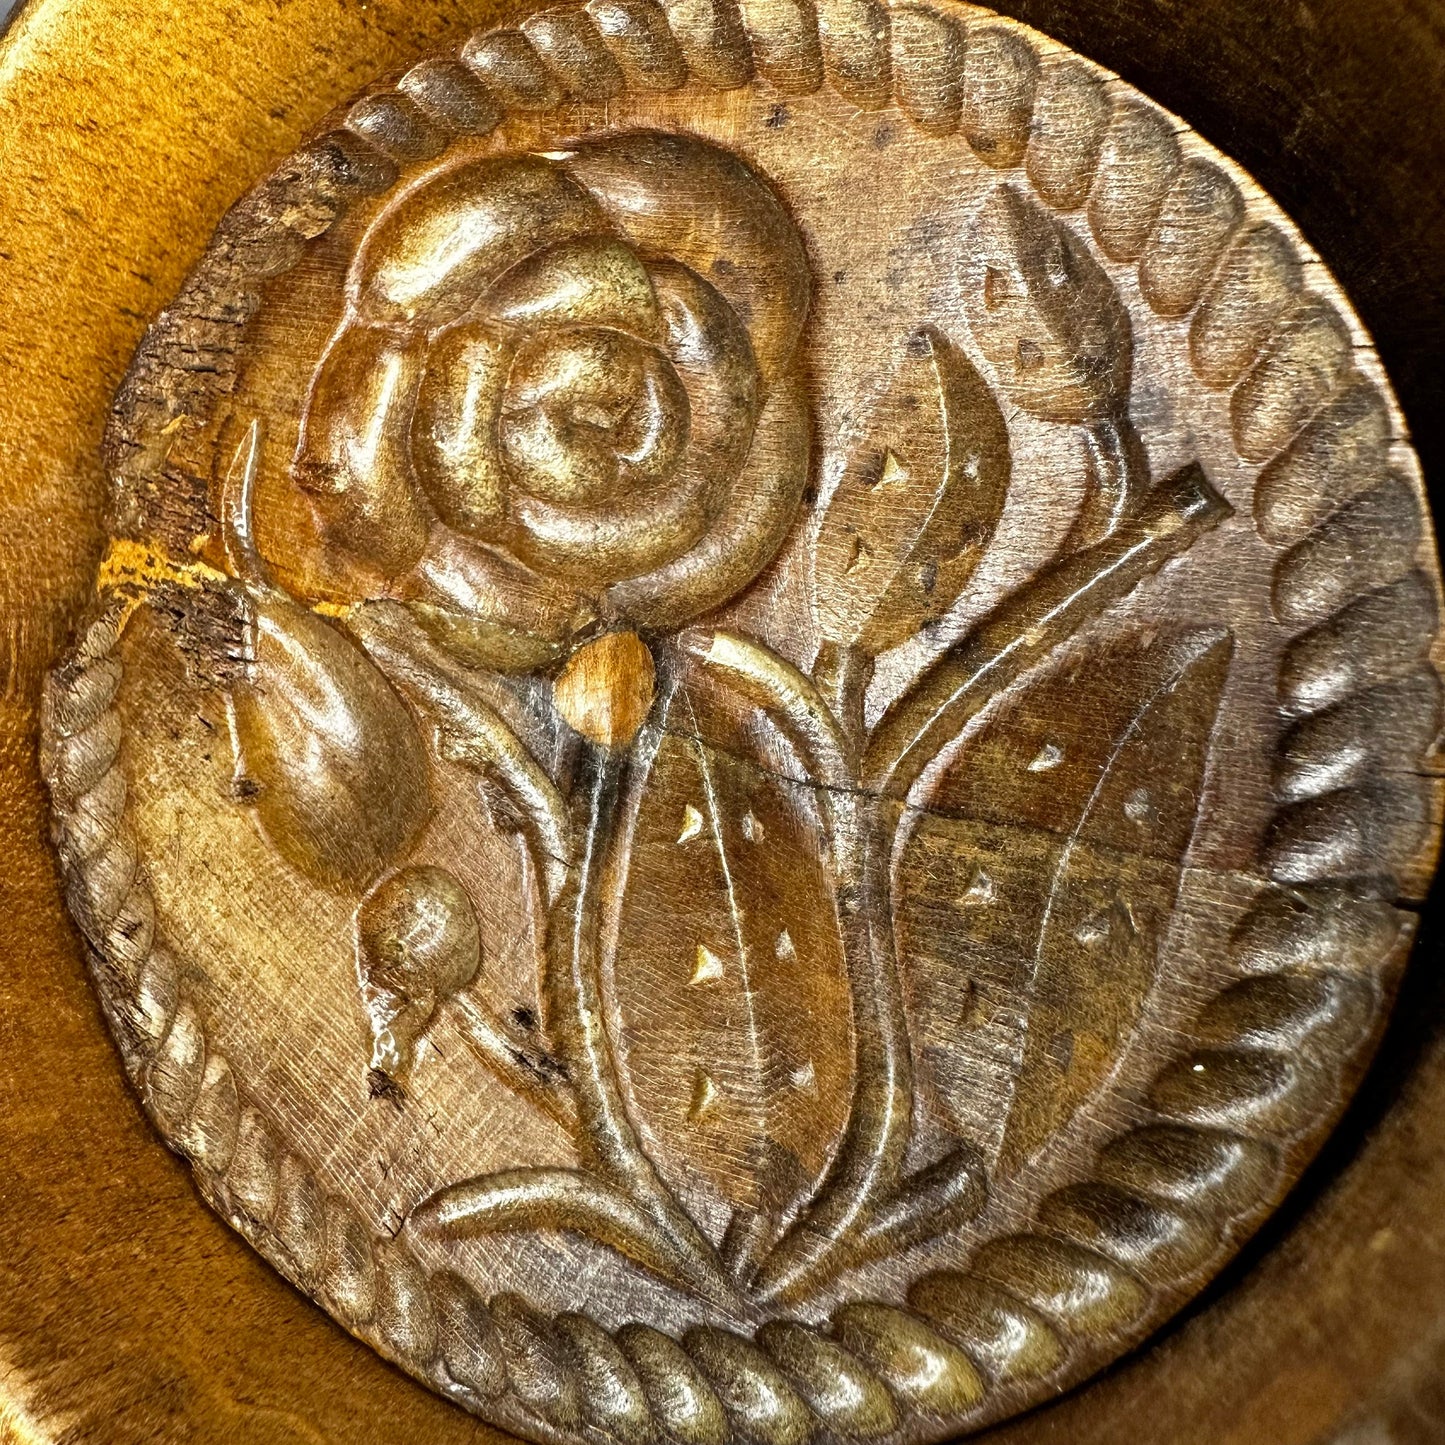 Fine Carved Rose Flower Butter Press Treen 1060